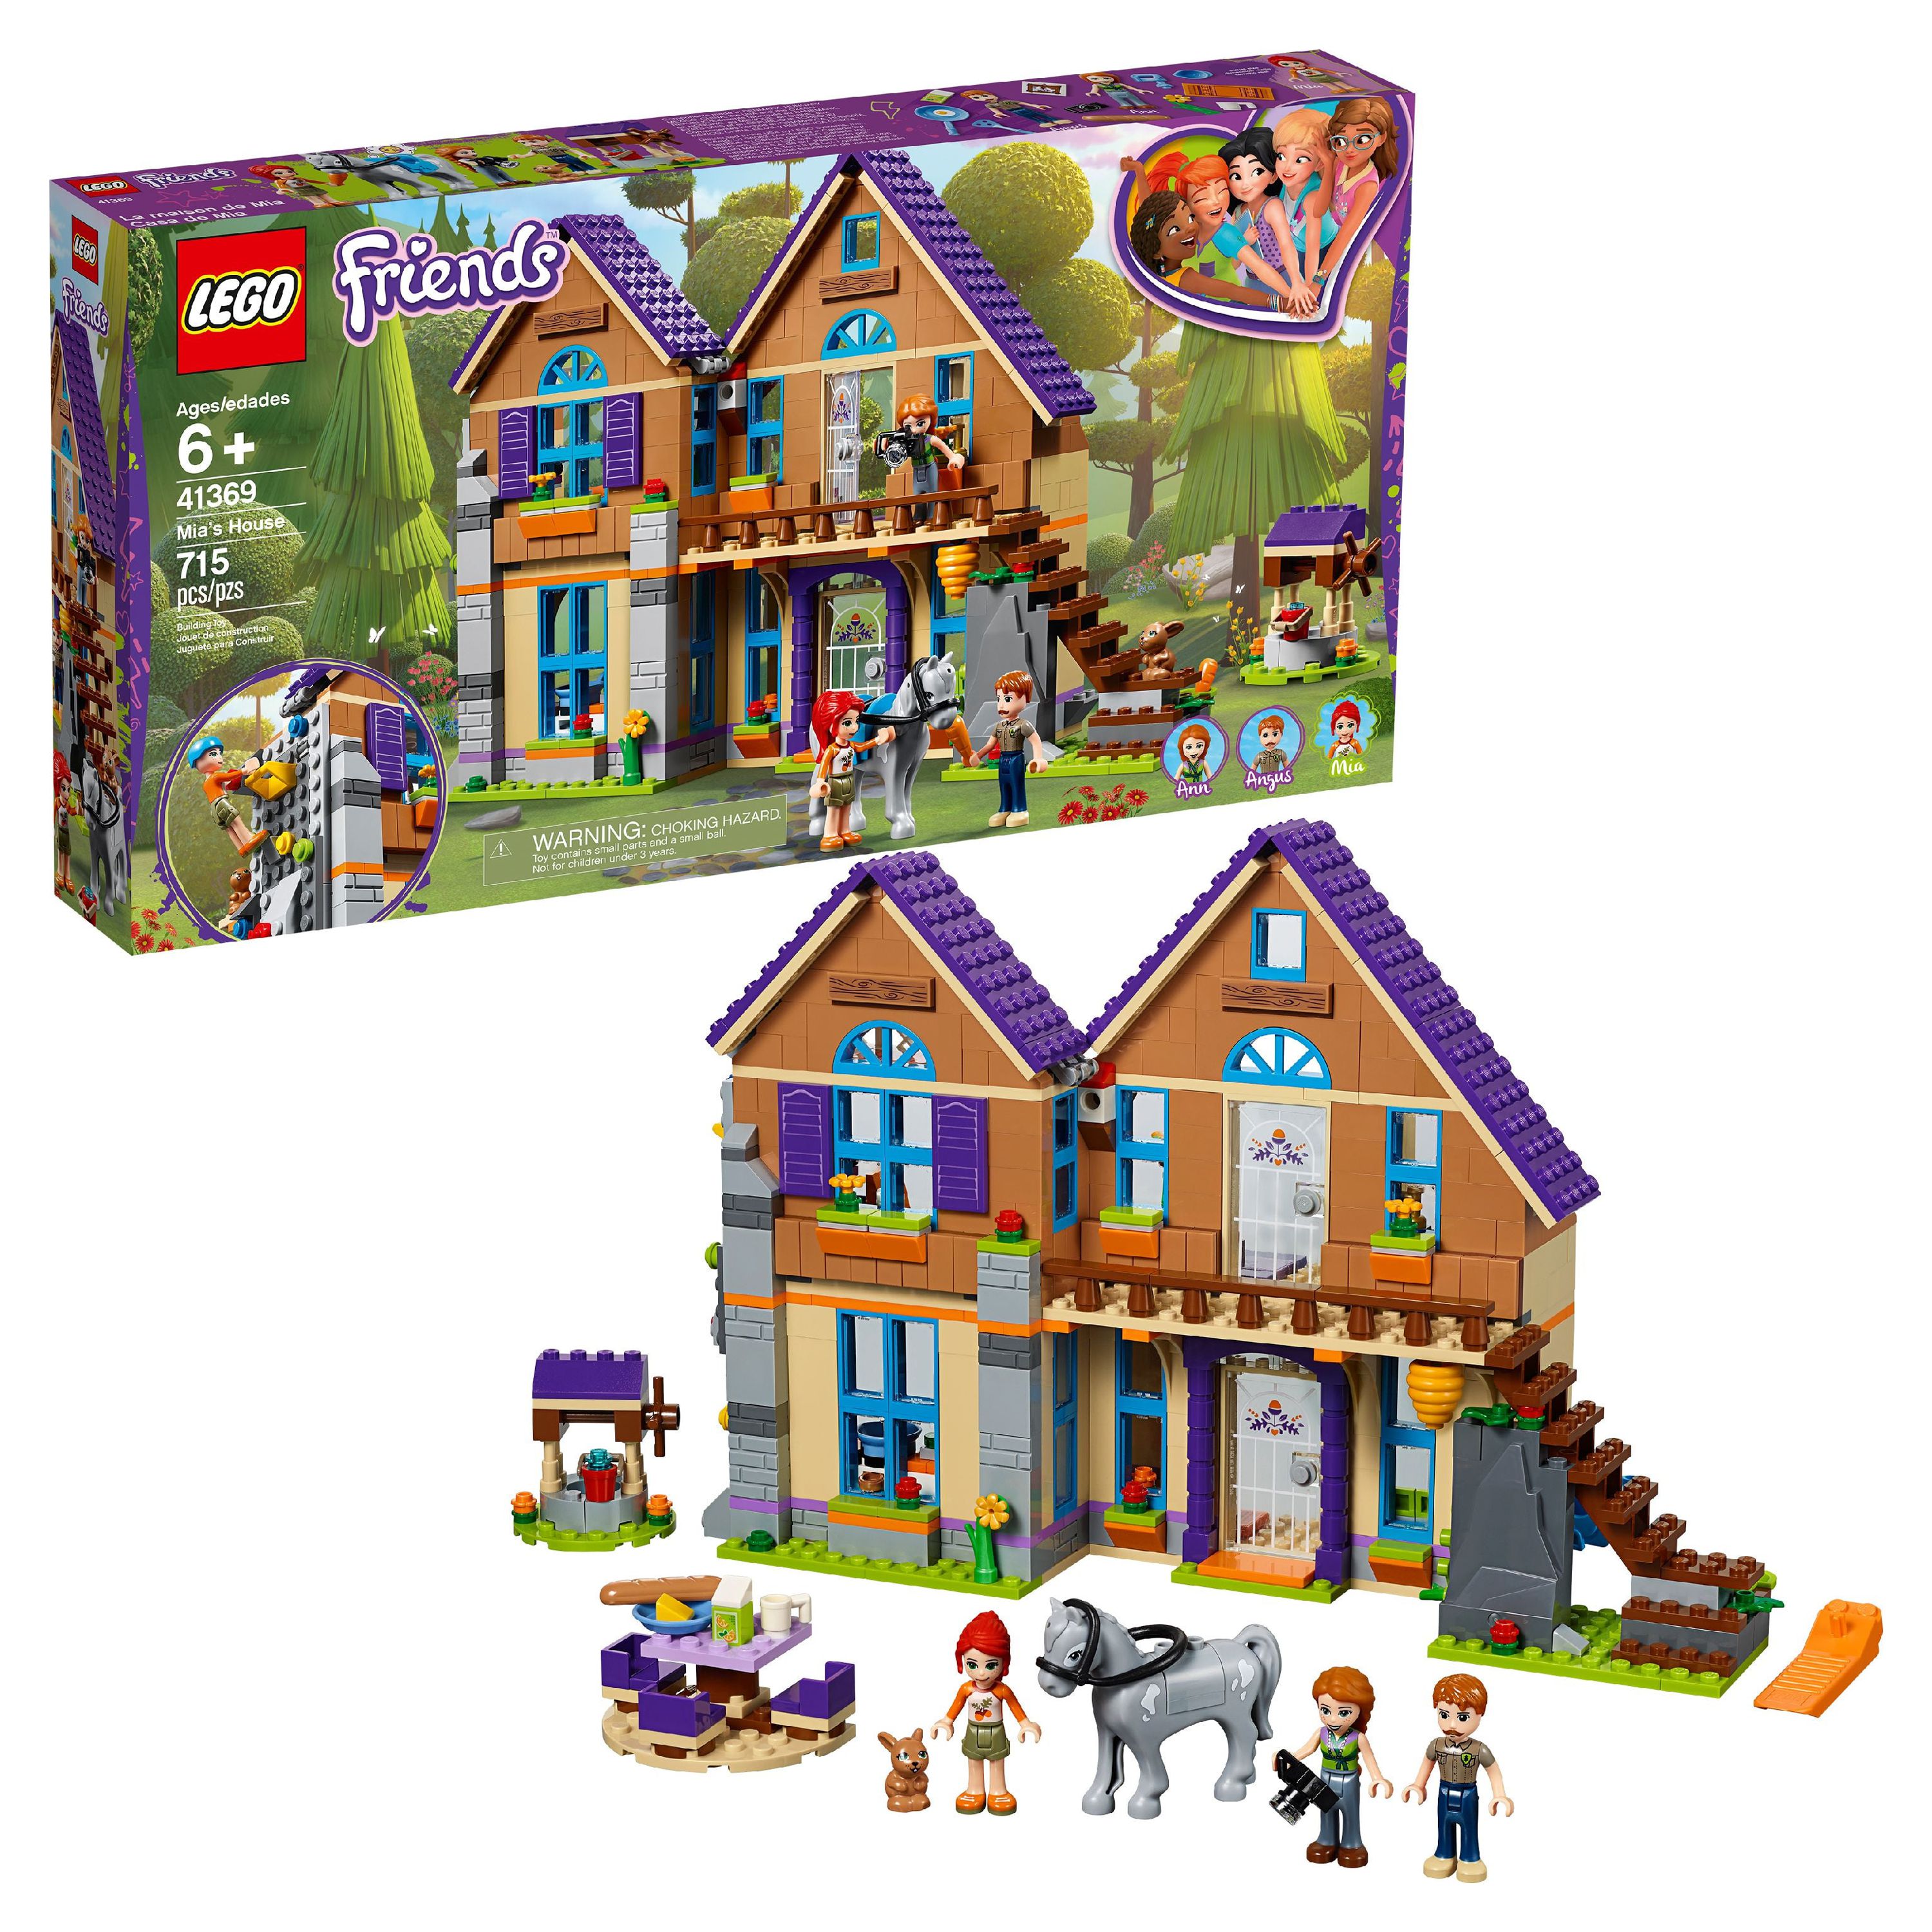 LEGO Friends Mias House 41369 - image 1 of 7